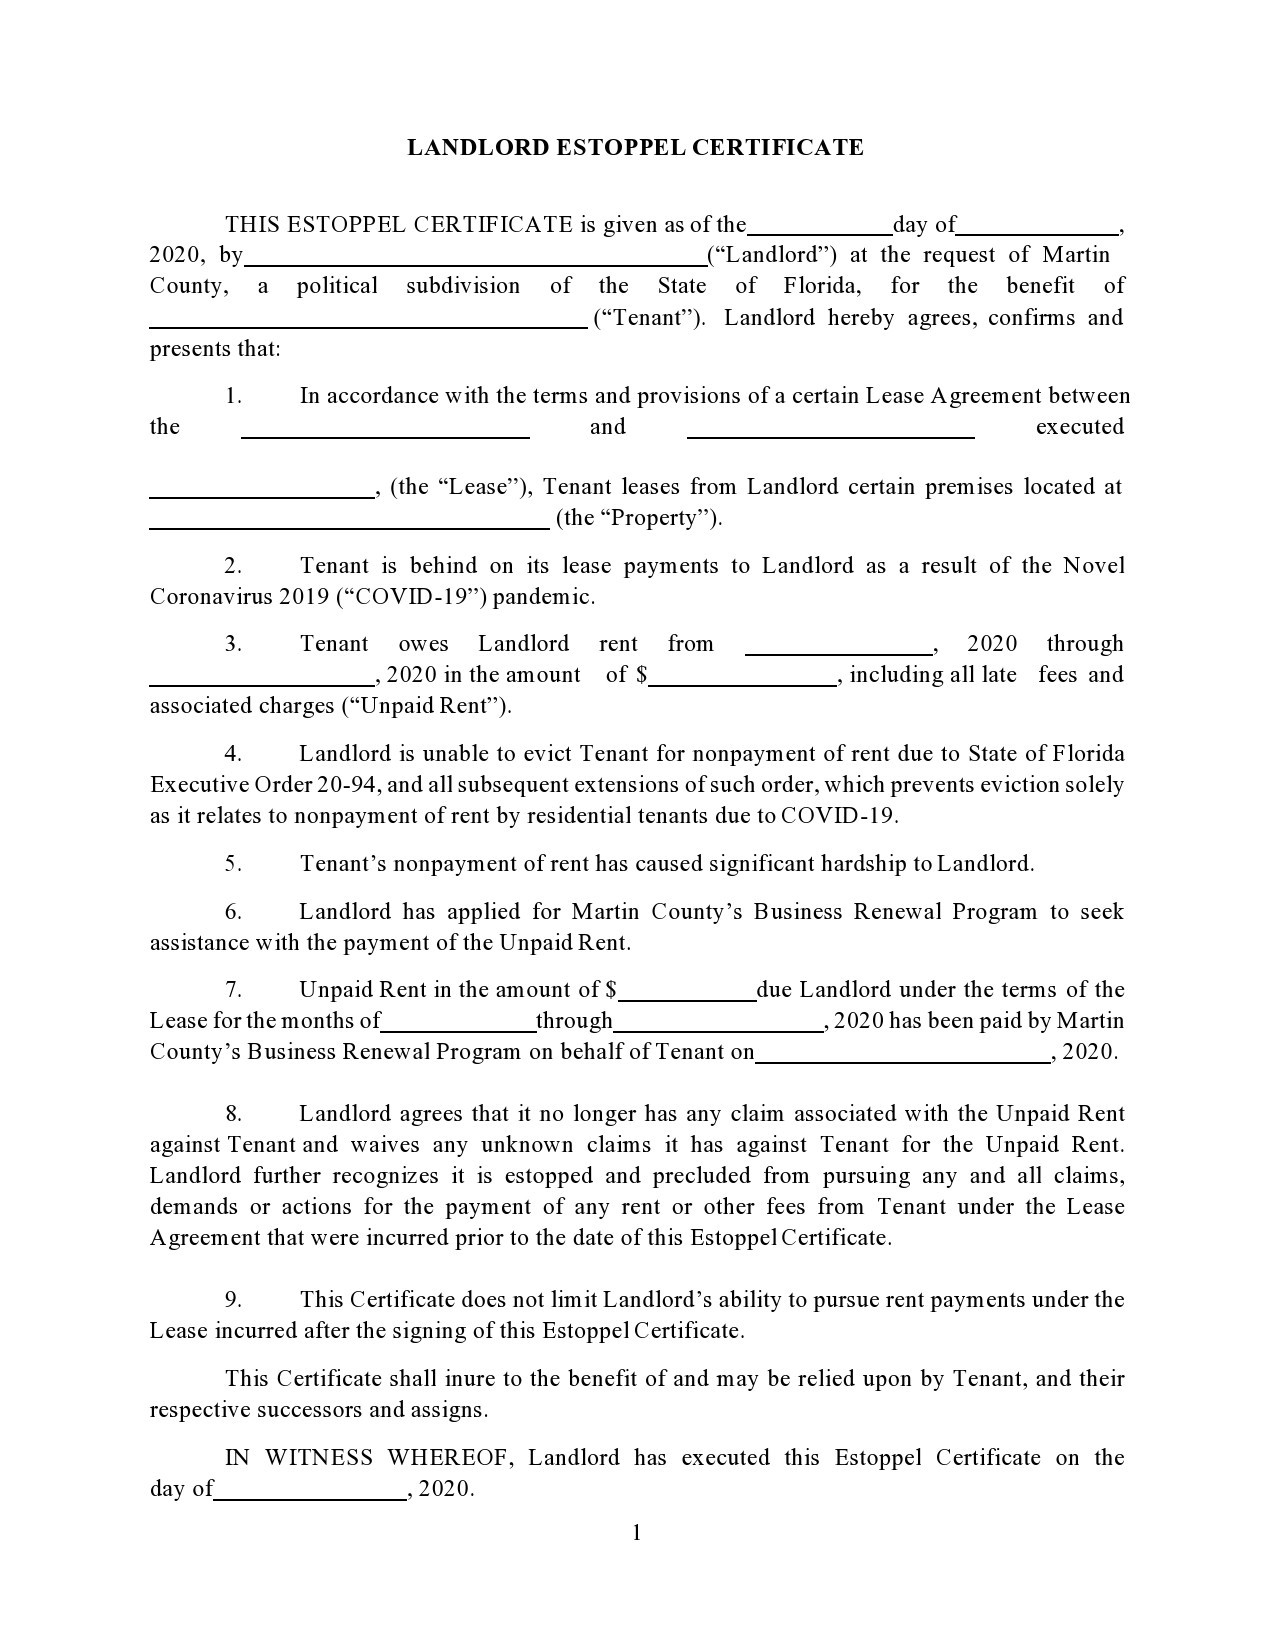 41 Real Estoppel Certificate Forms ( Samples) ᐅ TemplateLab